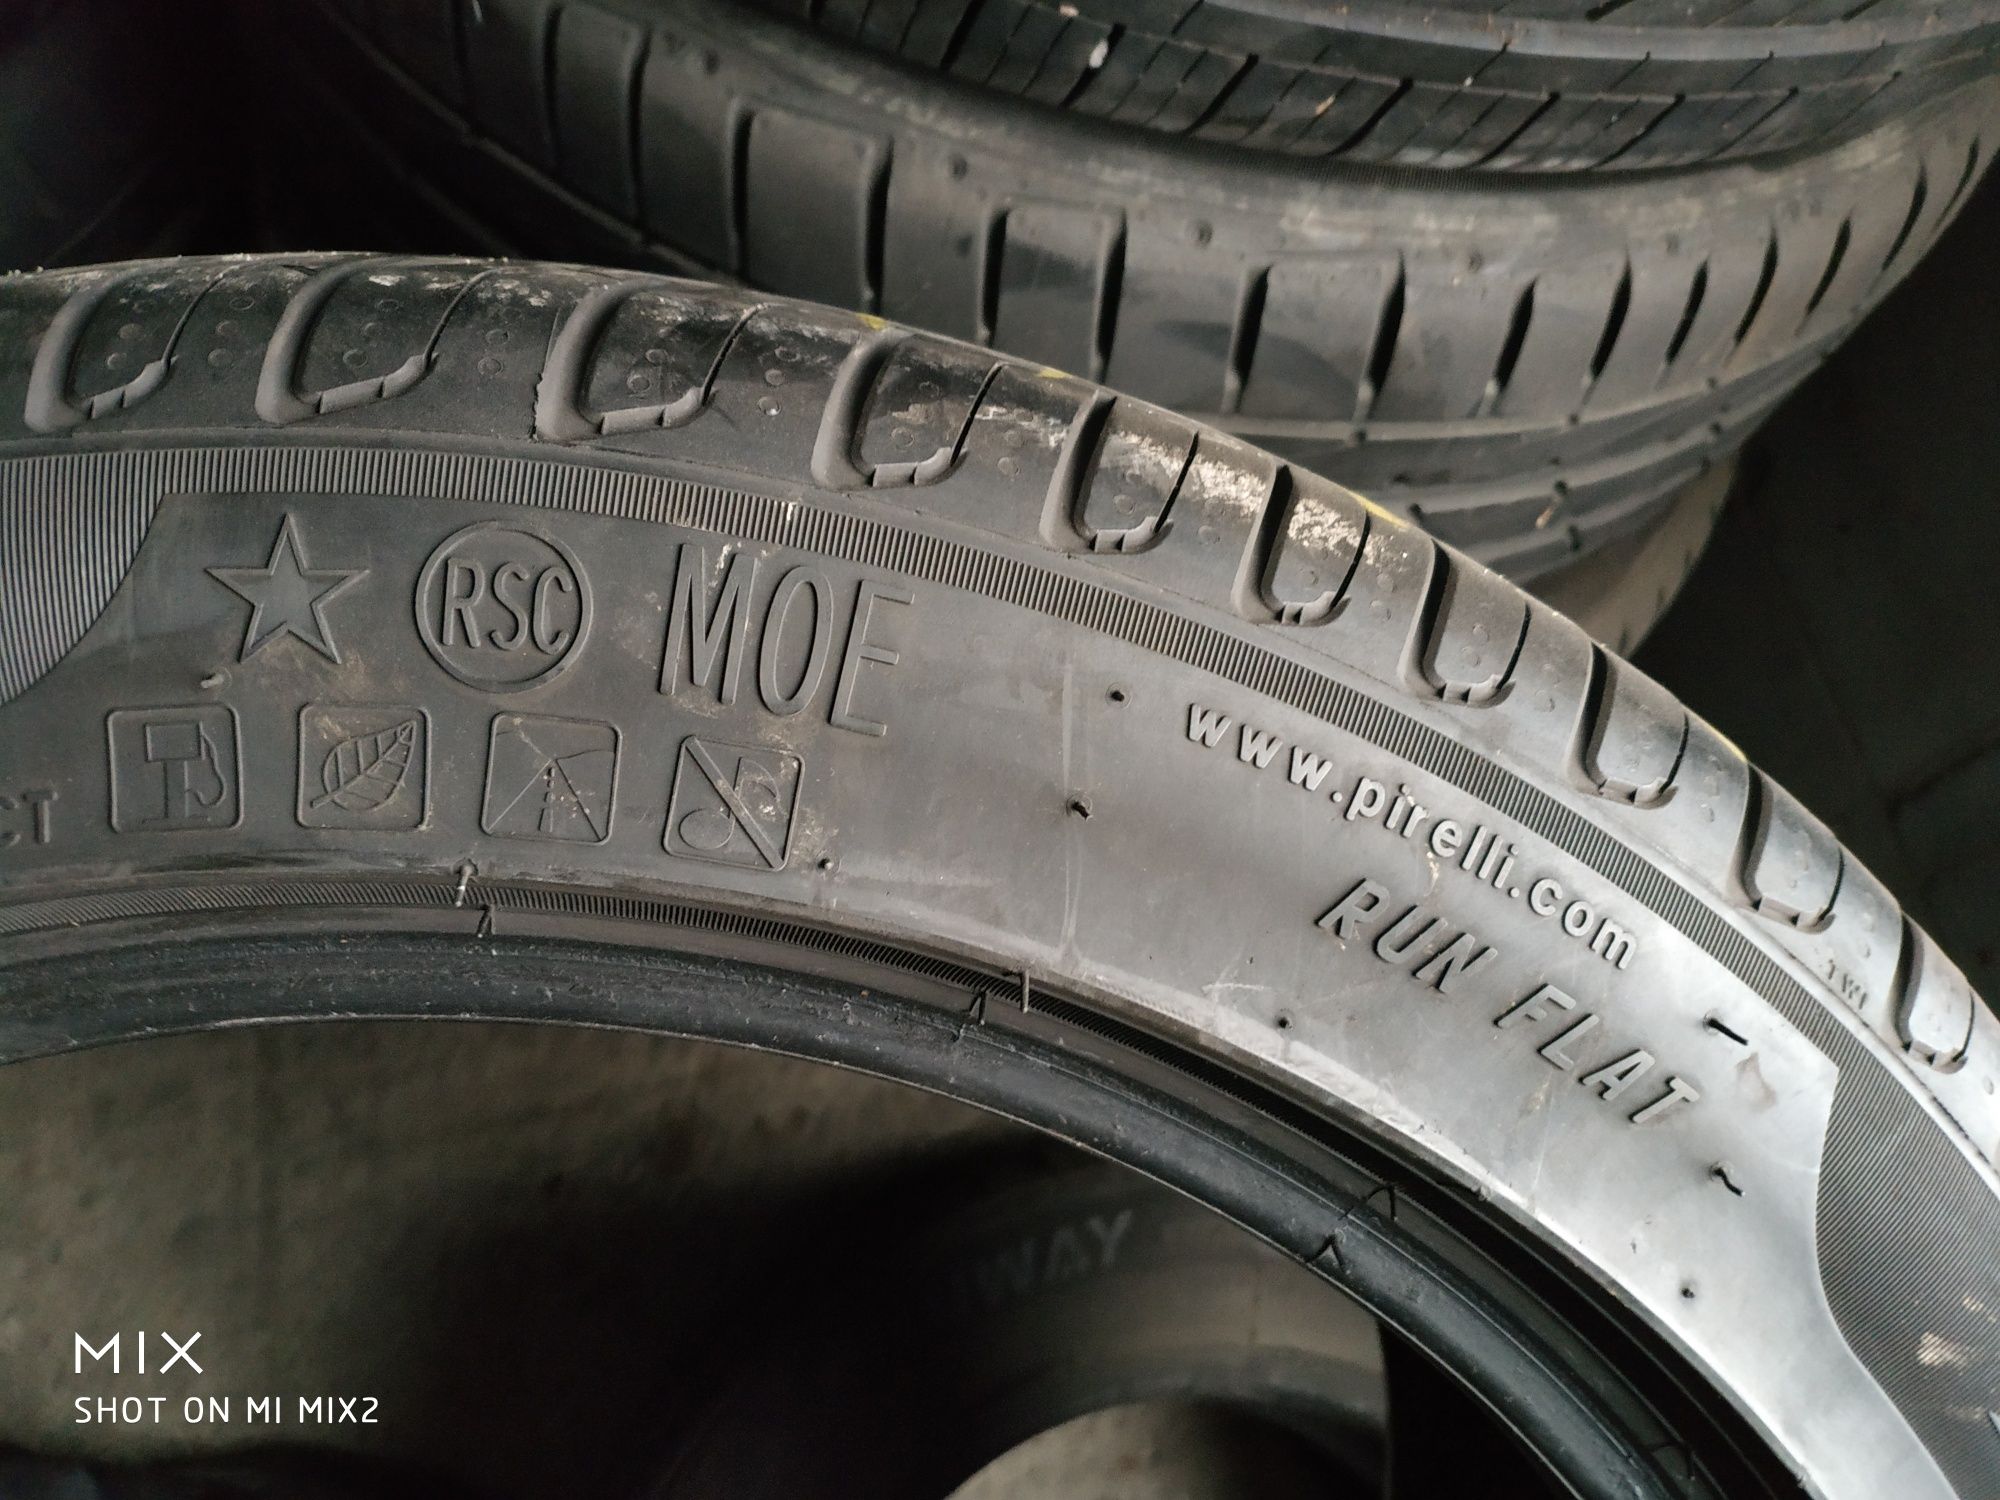 Opony Pirelli 275/40 r18 Rsc run flat dot 2022 6,5mm letnie 18